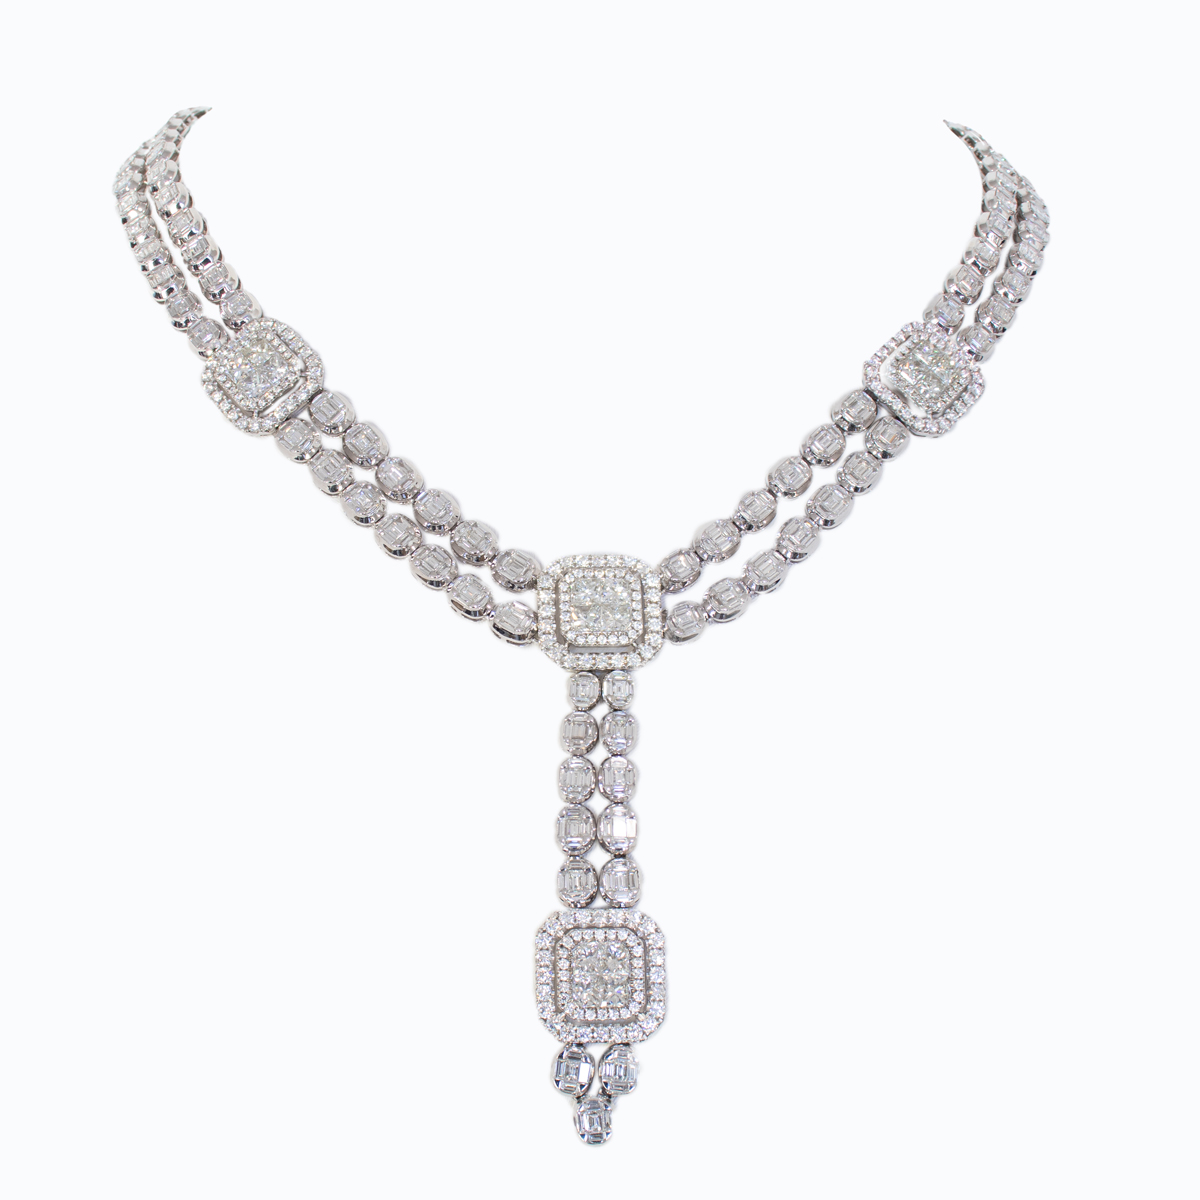 Marie Antoinette Chanel -inspired Diamond Necklace.